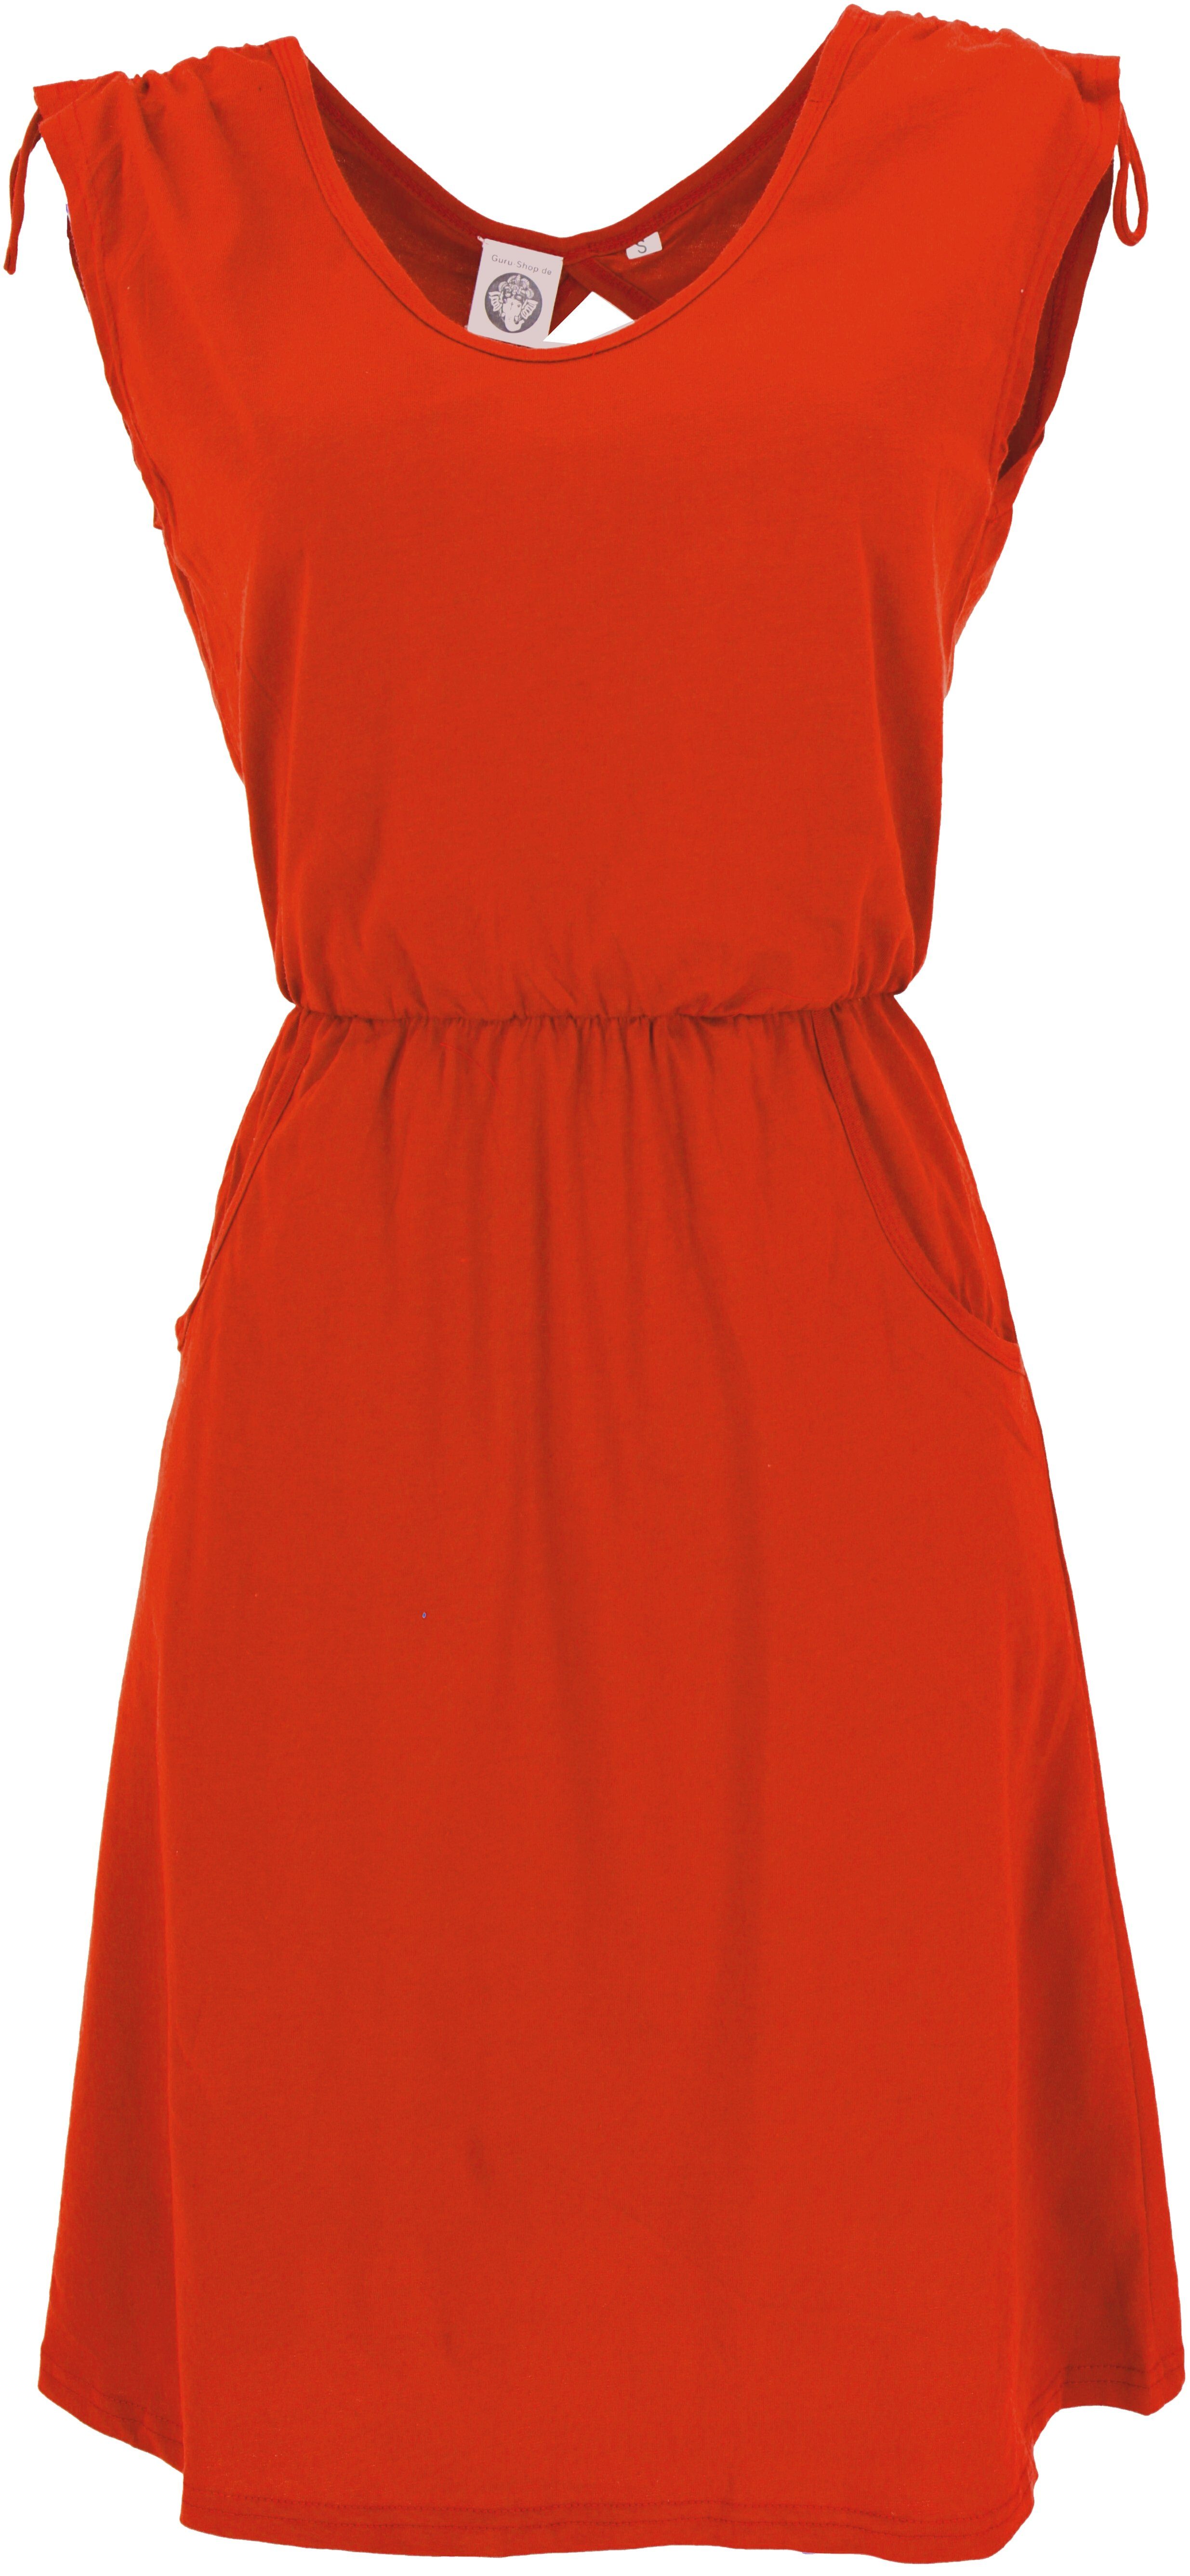 Guru-Shop Midikleid Ethno alternative Bekleidung Minikleid, Kleid korallrot aus.. rückenfreies